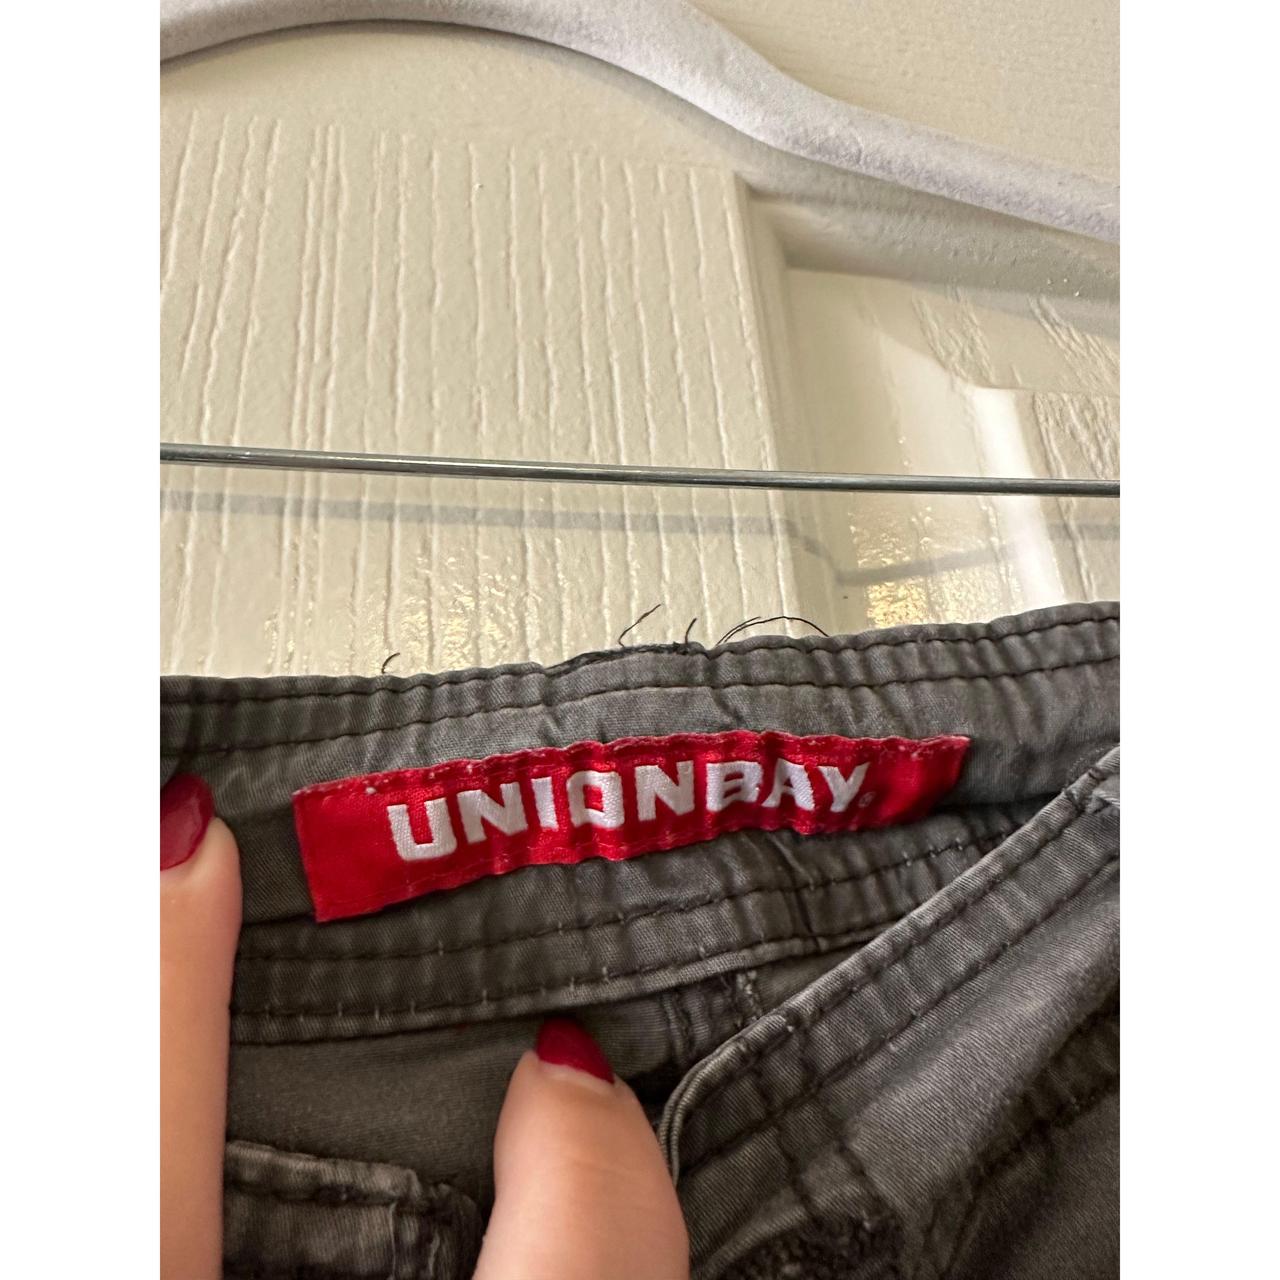 Union Bay Men's Grey Shorts (4)